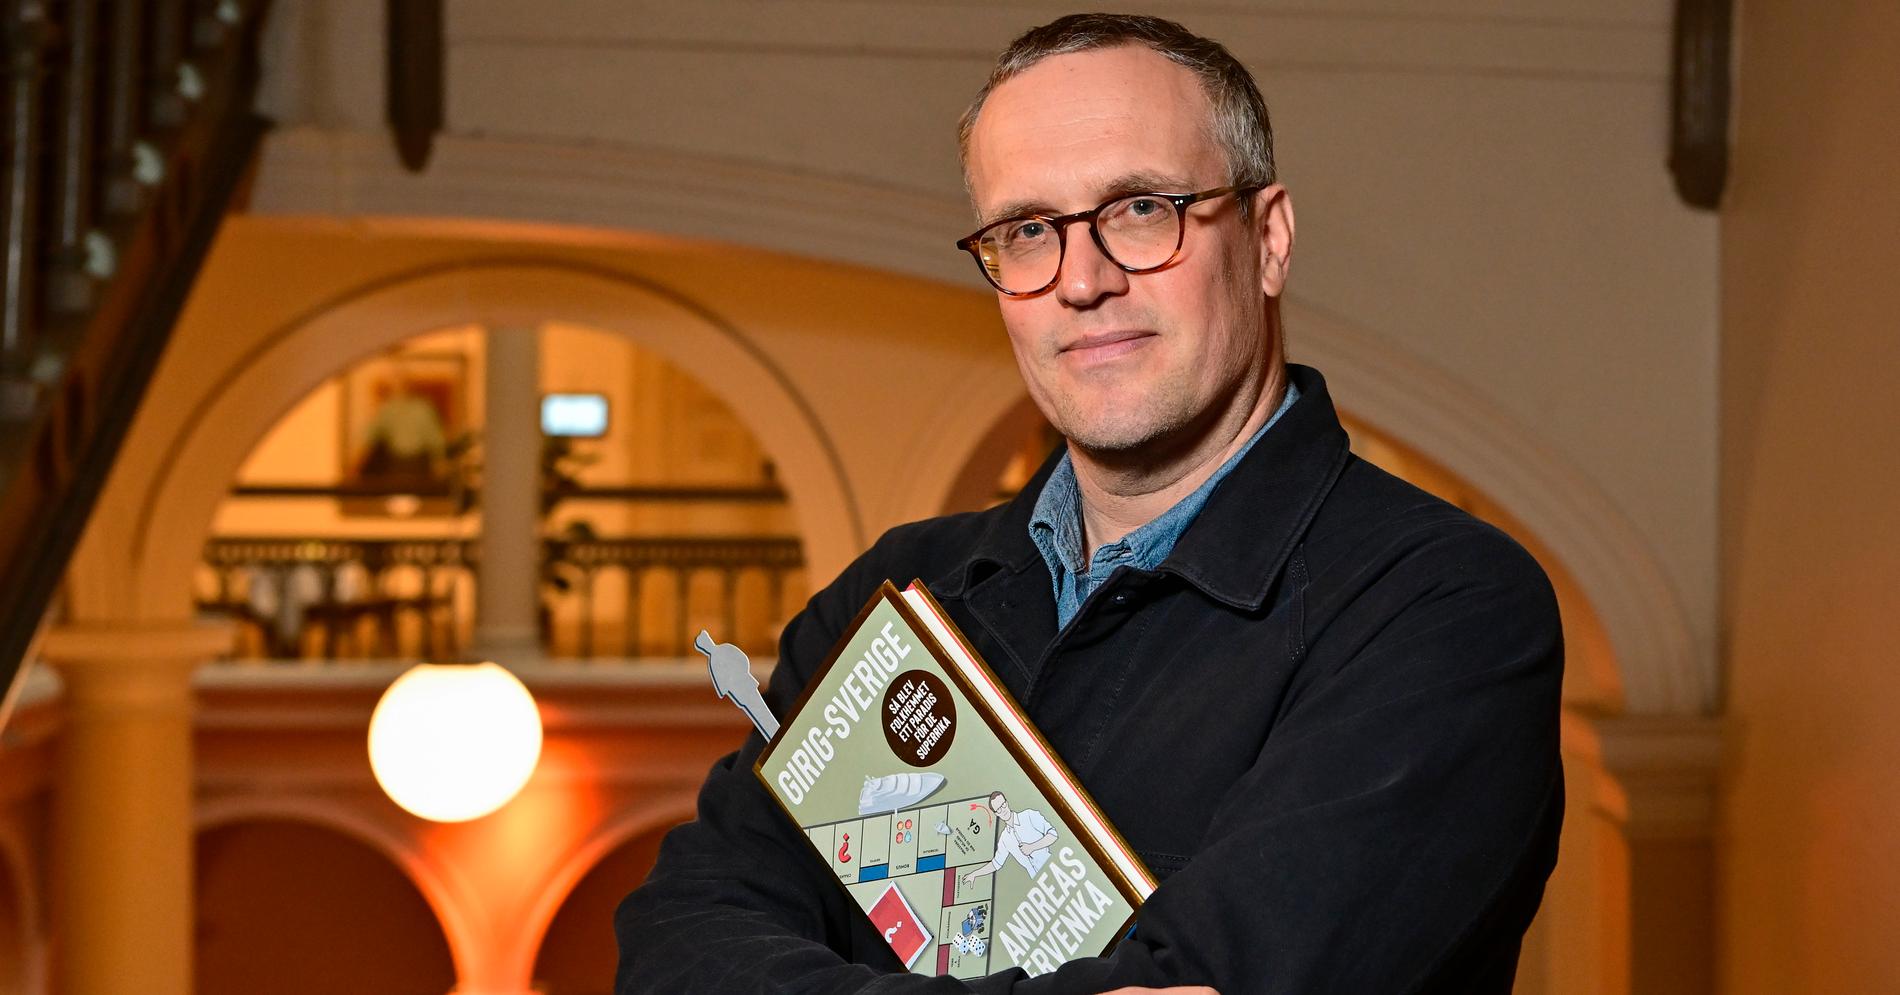 Andreas Cervenka med sin bok ”Girig-Sverige”.